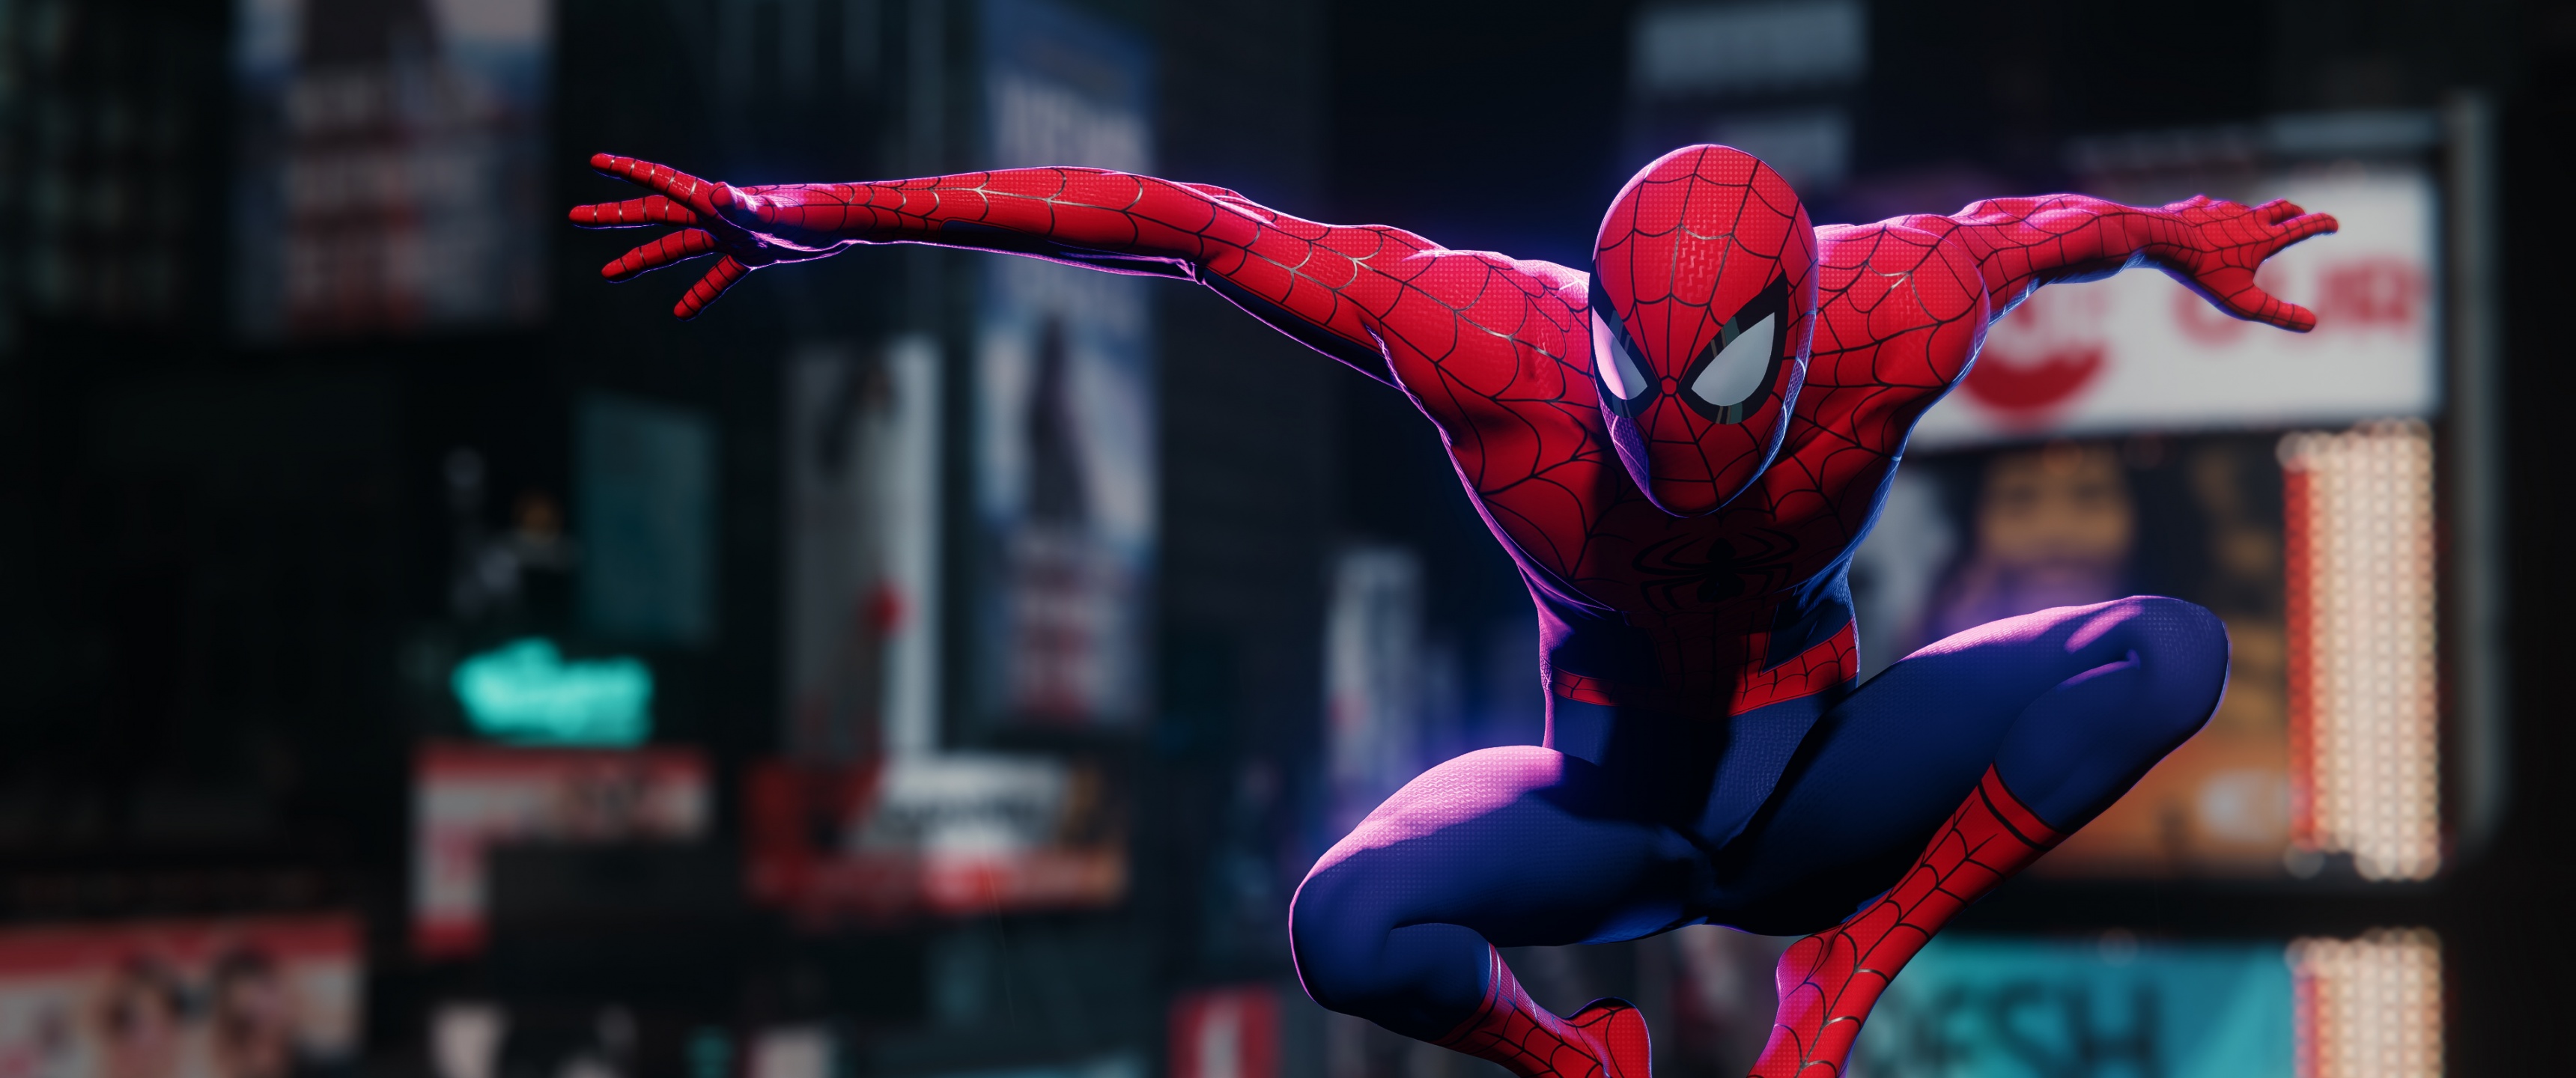 Download wallpaper: Spider Man: Miles Morales screenshot 1366x768